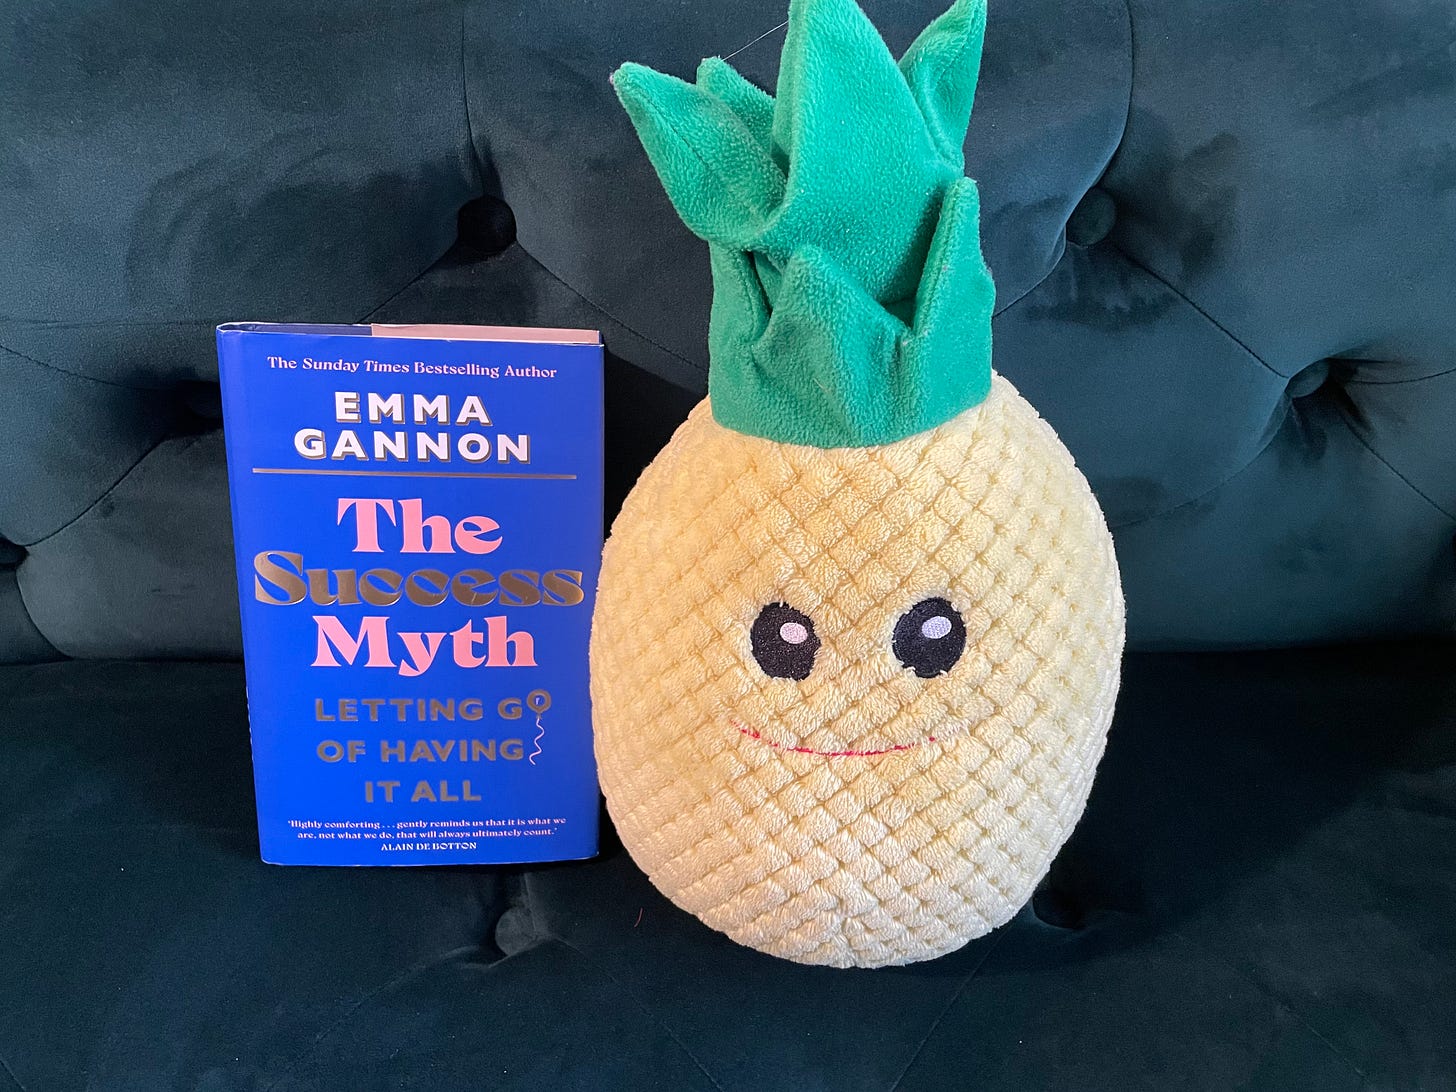 the success myth by emma gannon plus stuffed pineapple toy